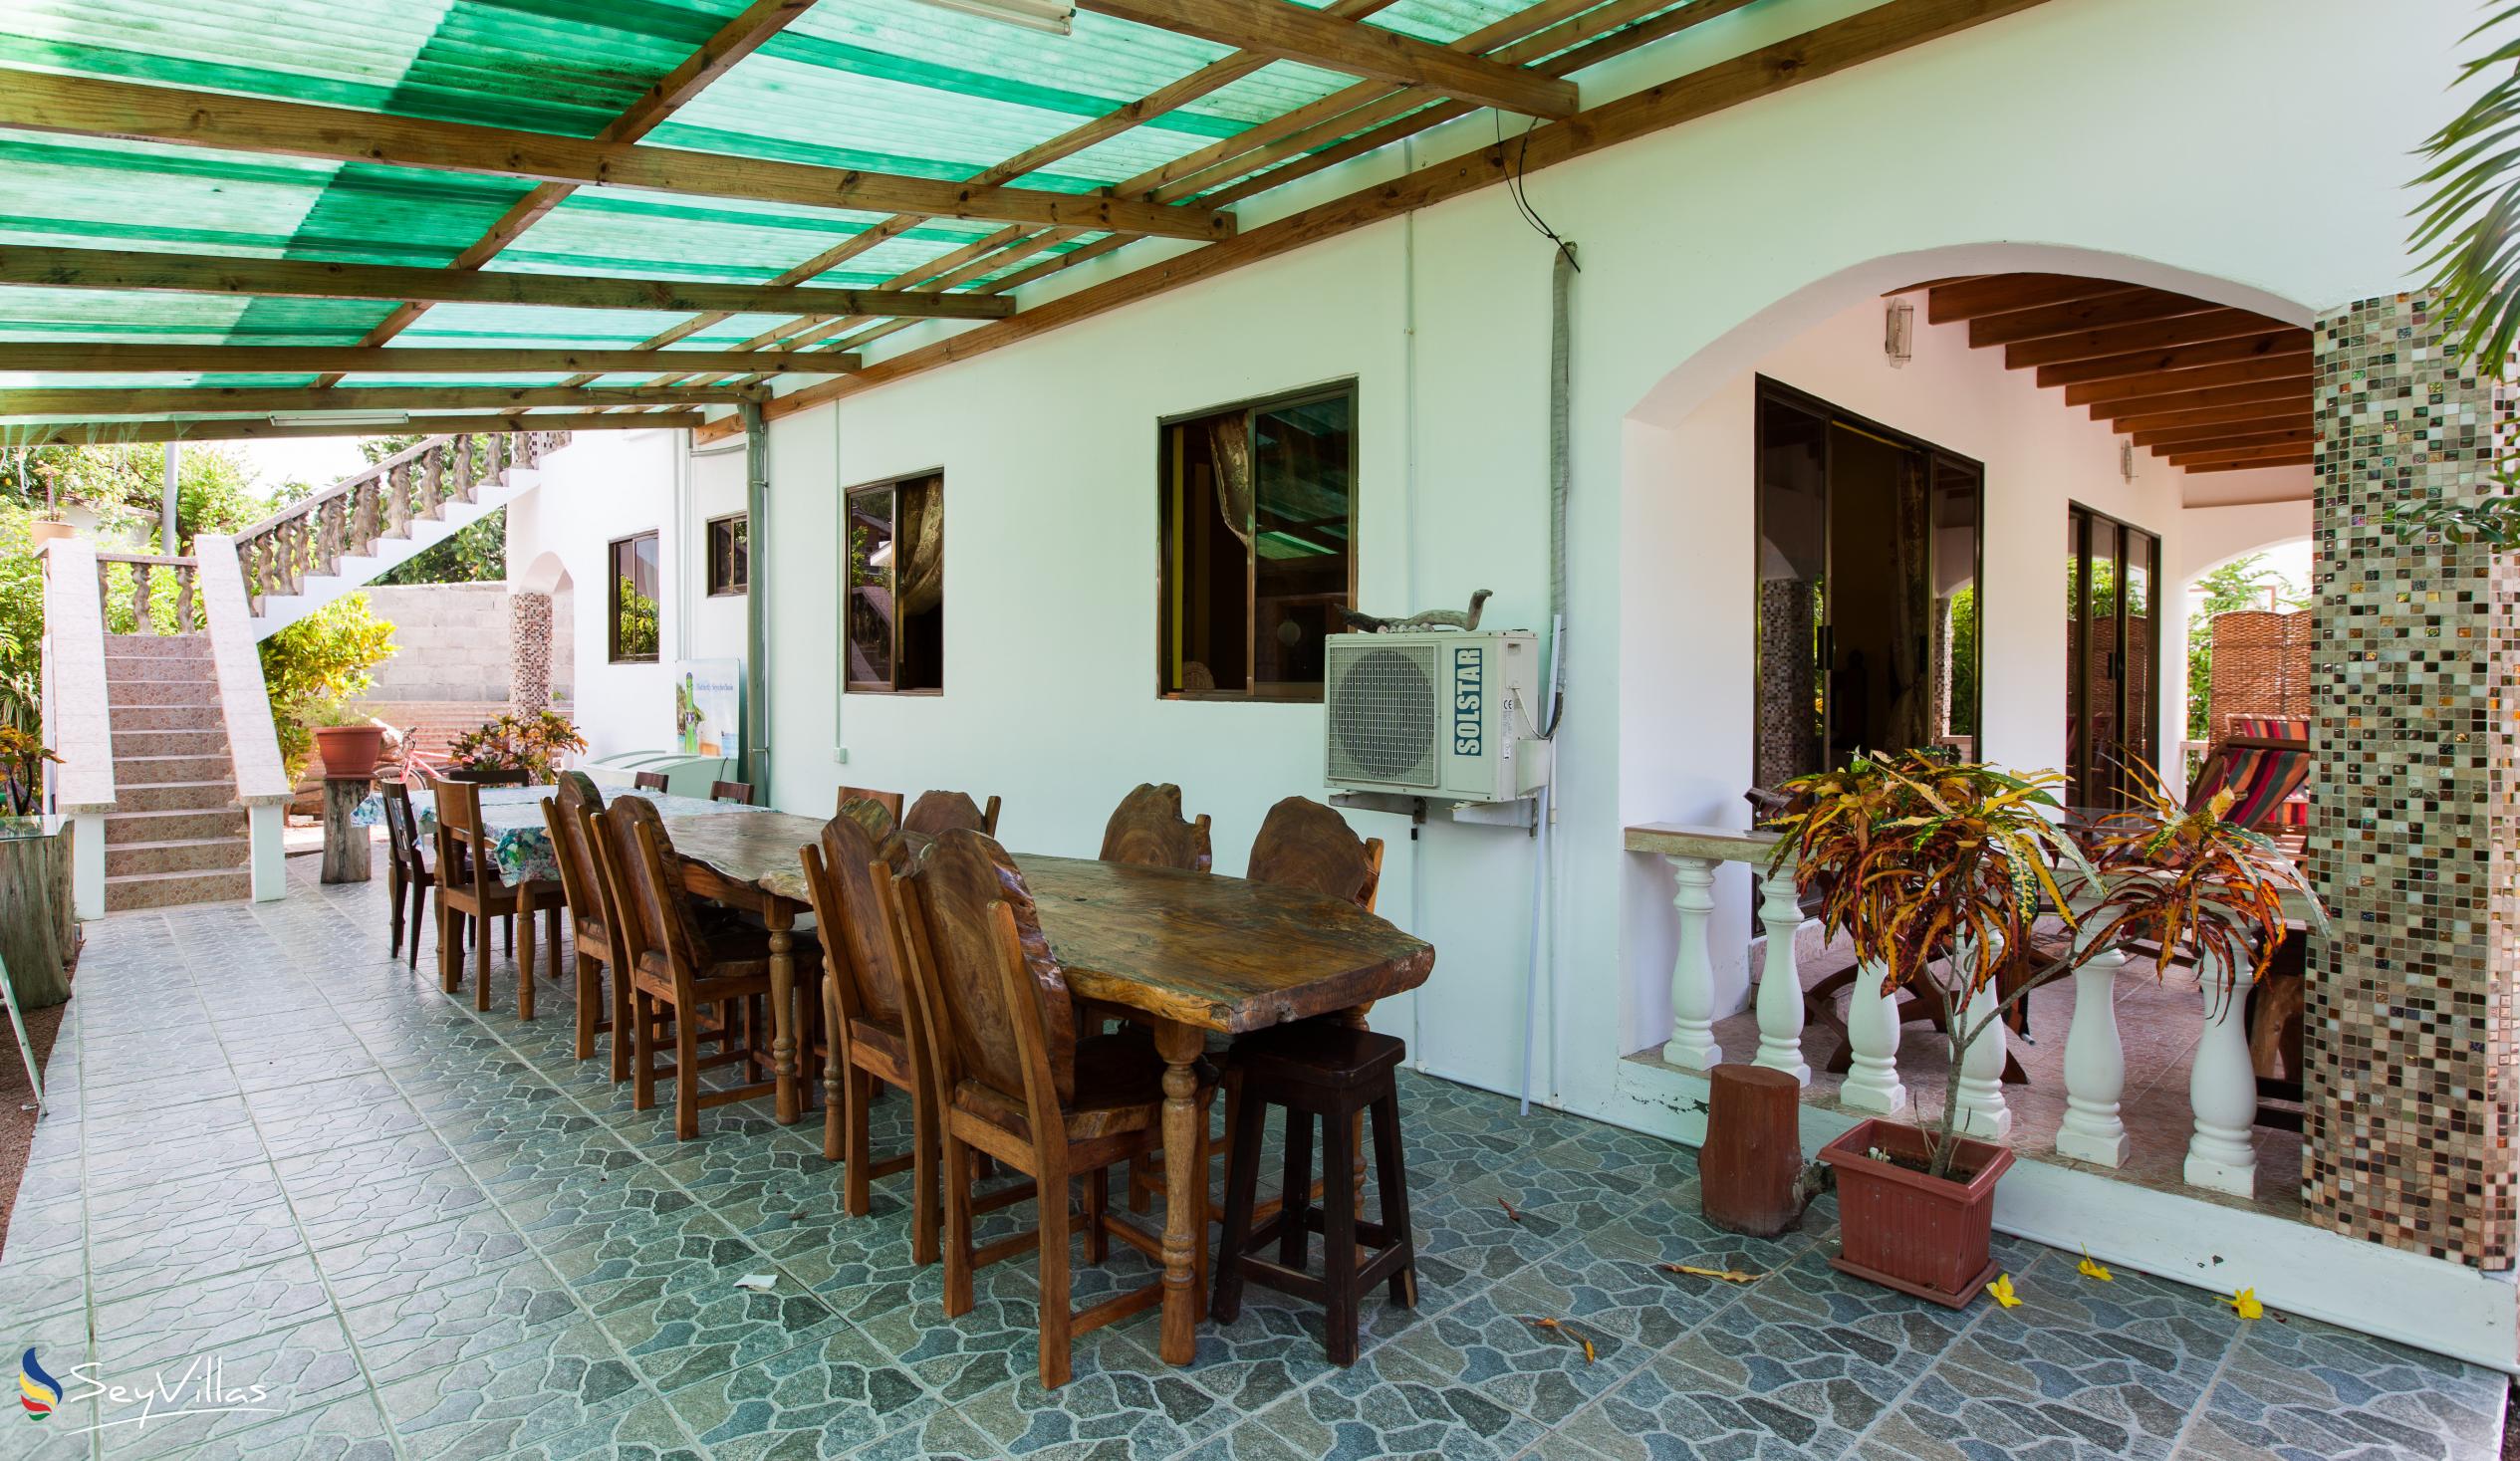 Foto 17: Linsen Self Catering Apartments - Innenbereich - La Digue (Seychellen)